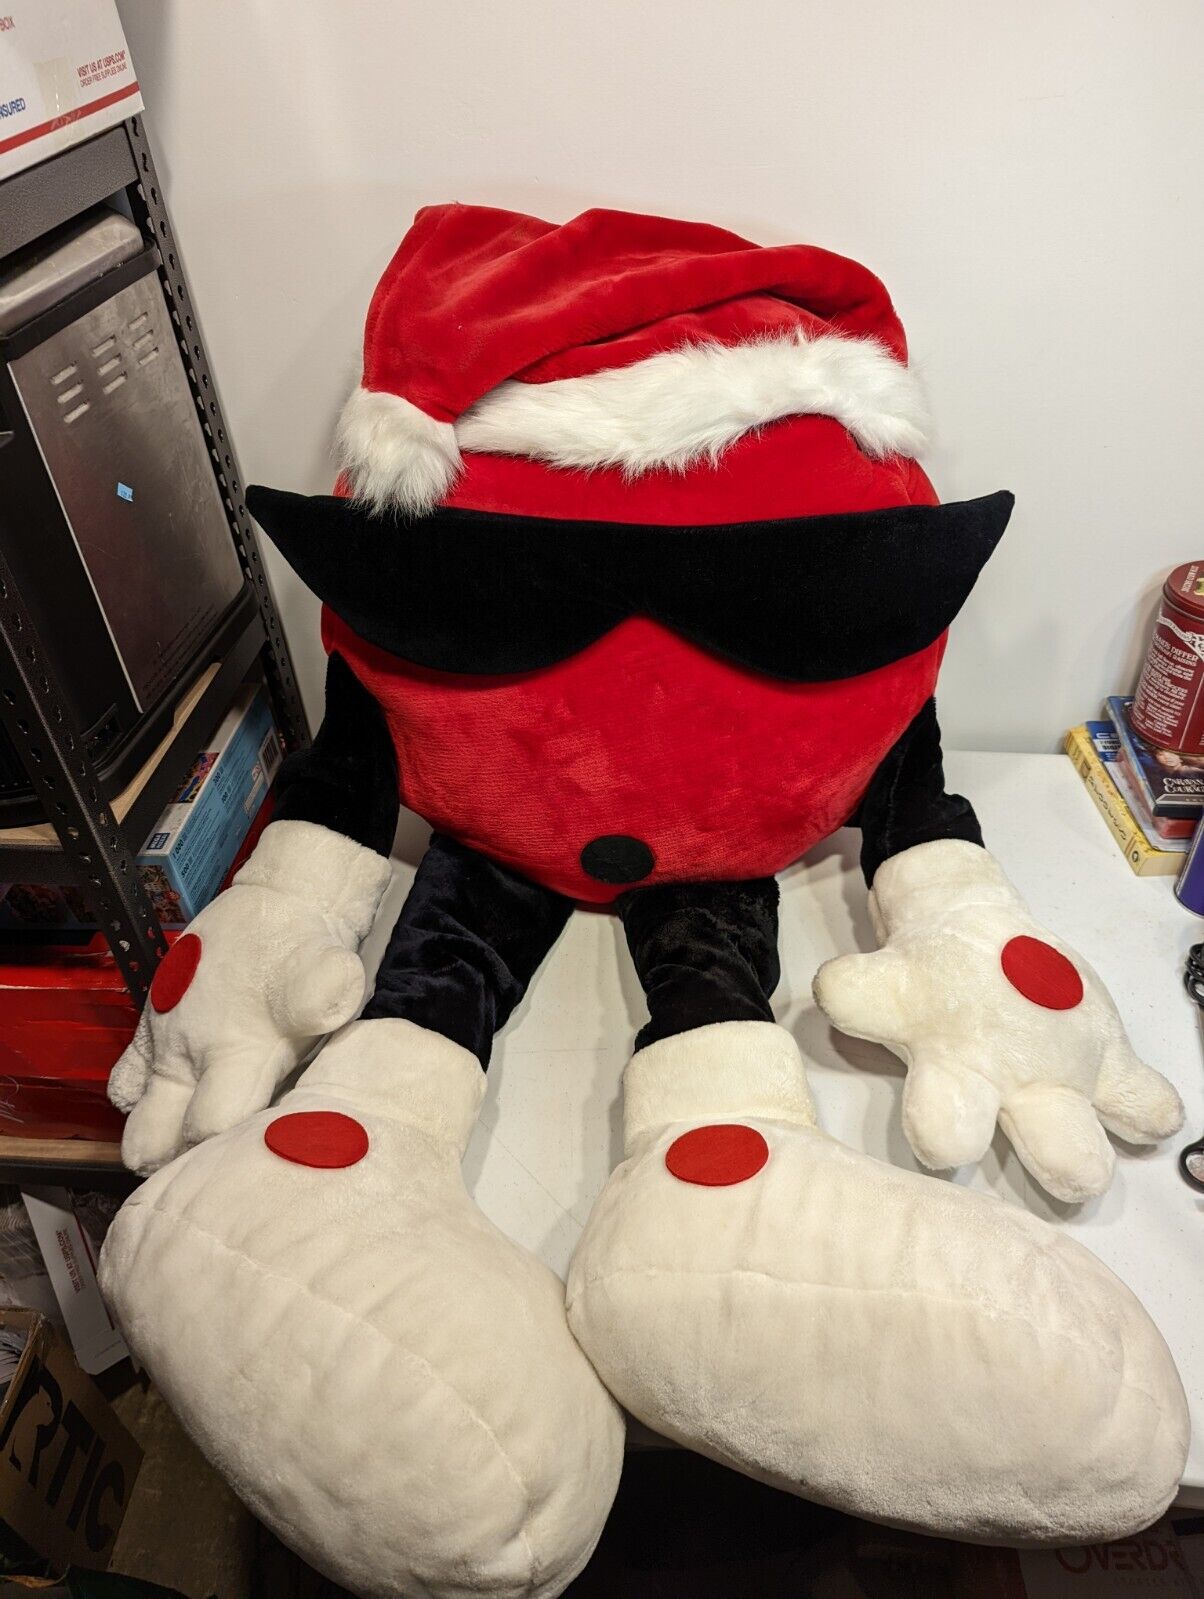 7UP Cool Spot Giant Plush Stuffed Toy w/ Santa hat 1987